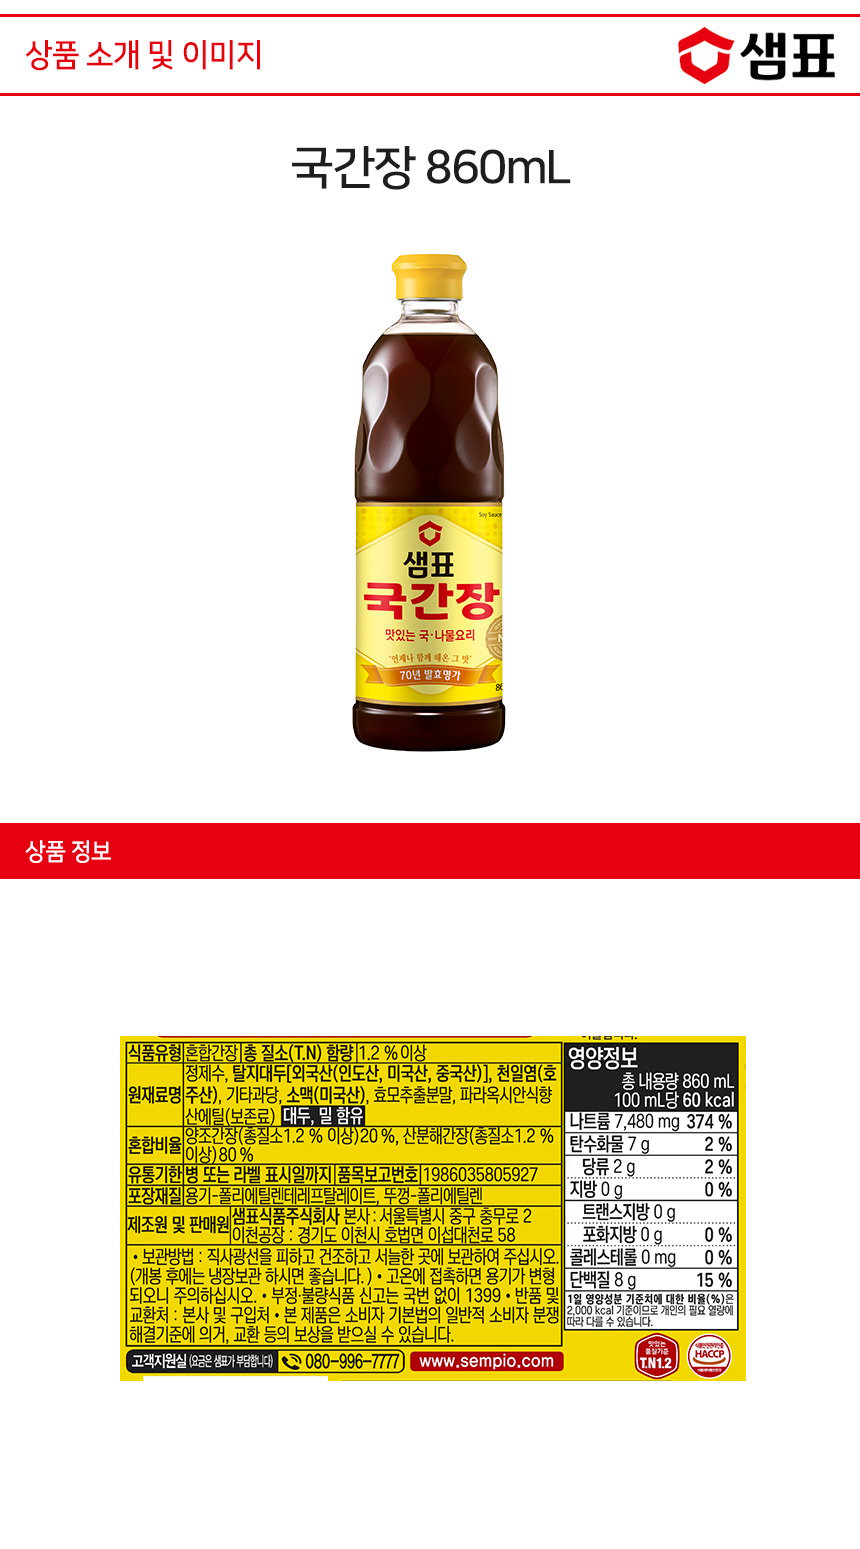 韓國食品-[Sempio] Soy Sauce [Soup] 860ml